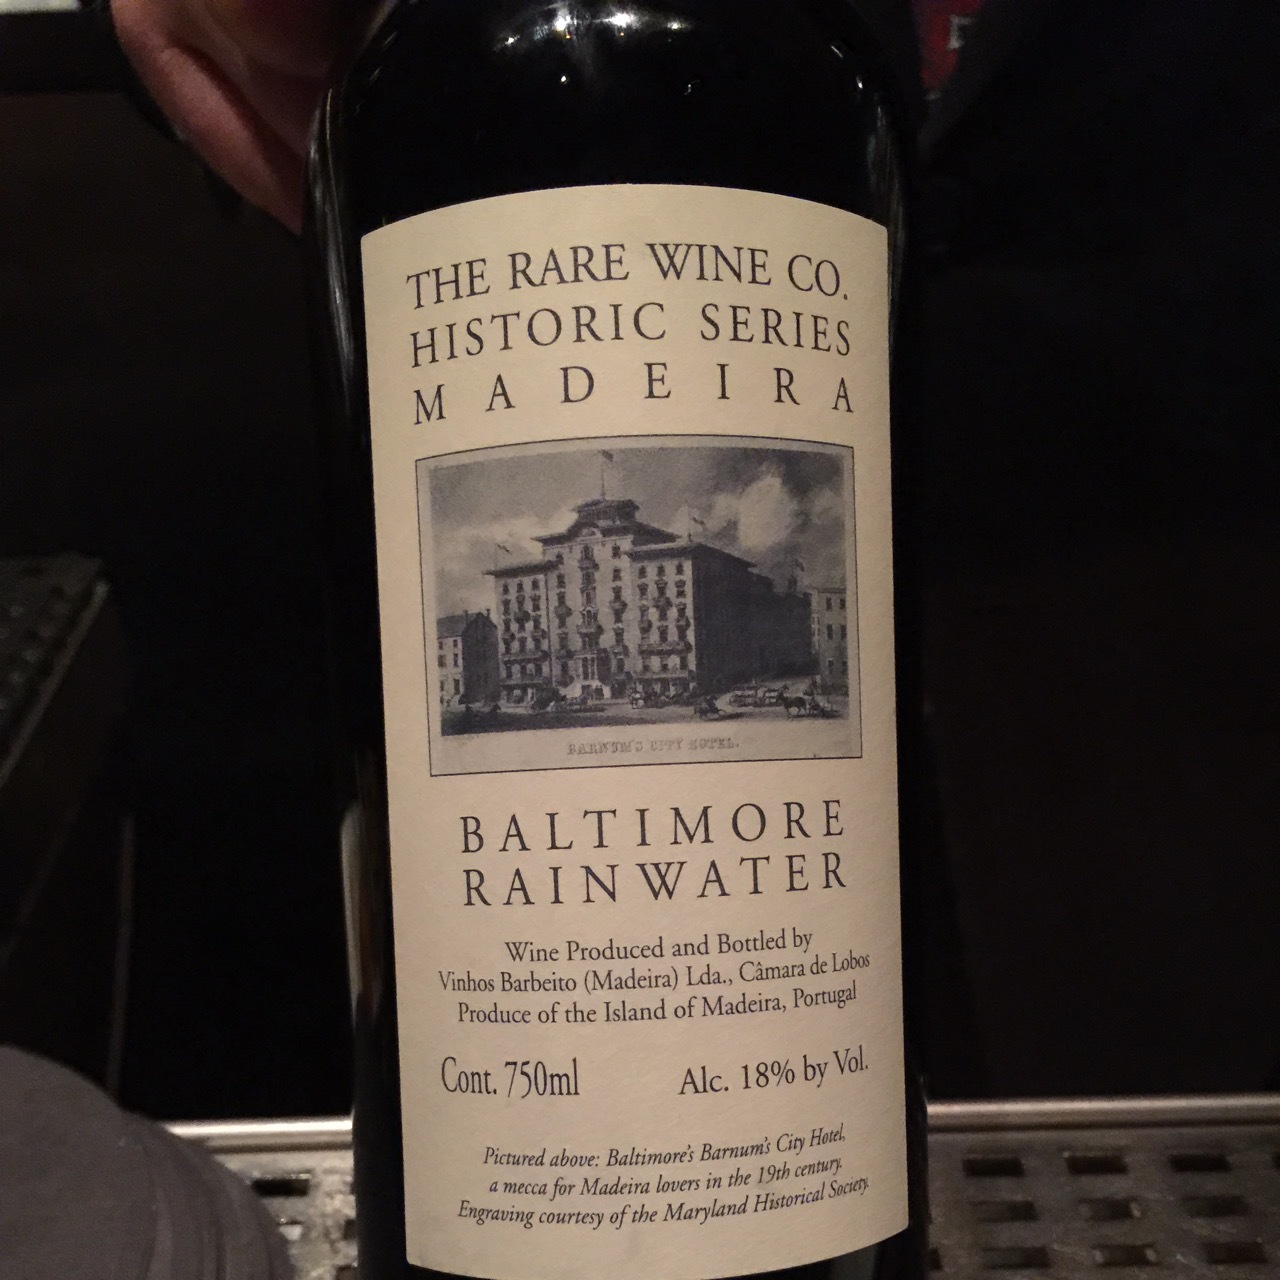 Rare Wine Co. Historic Series Baltimore Rainwater Madeira - click image for full description